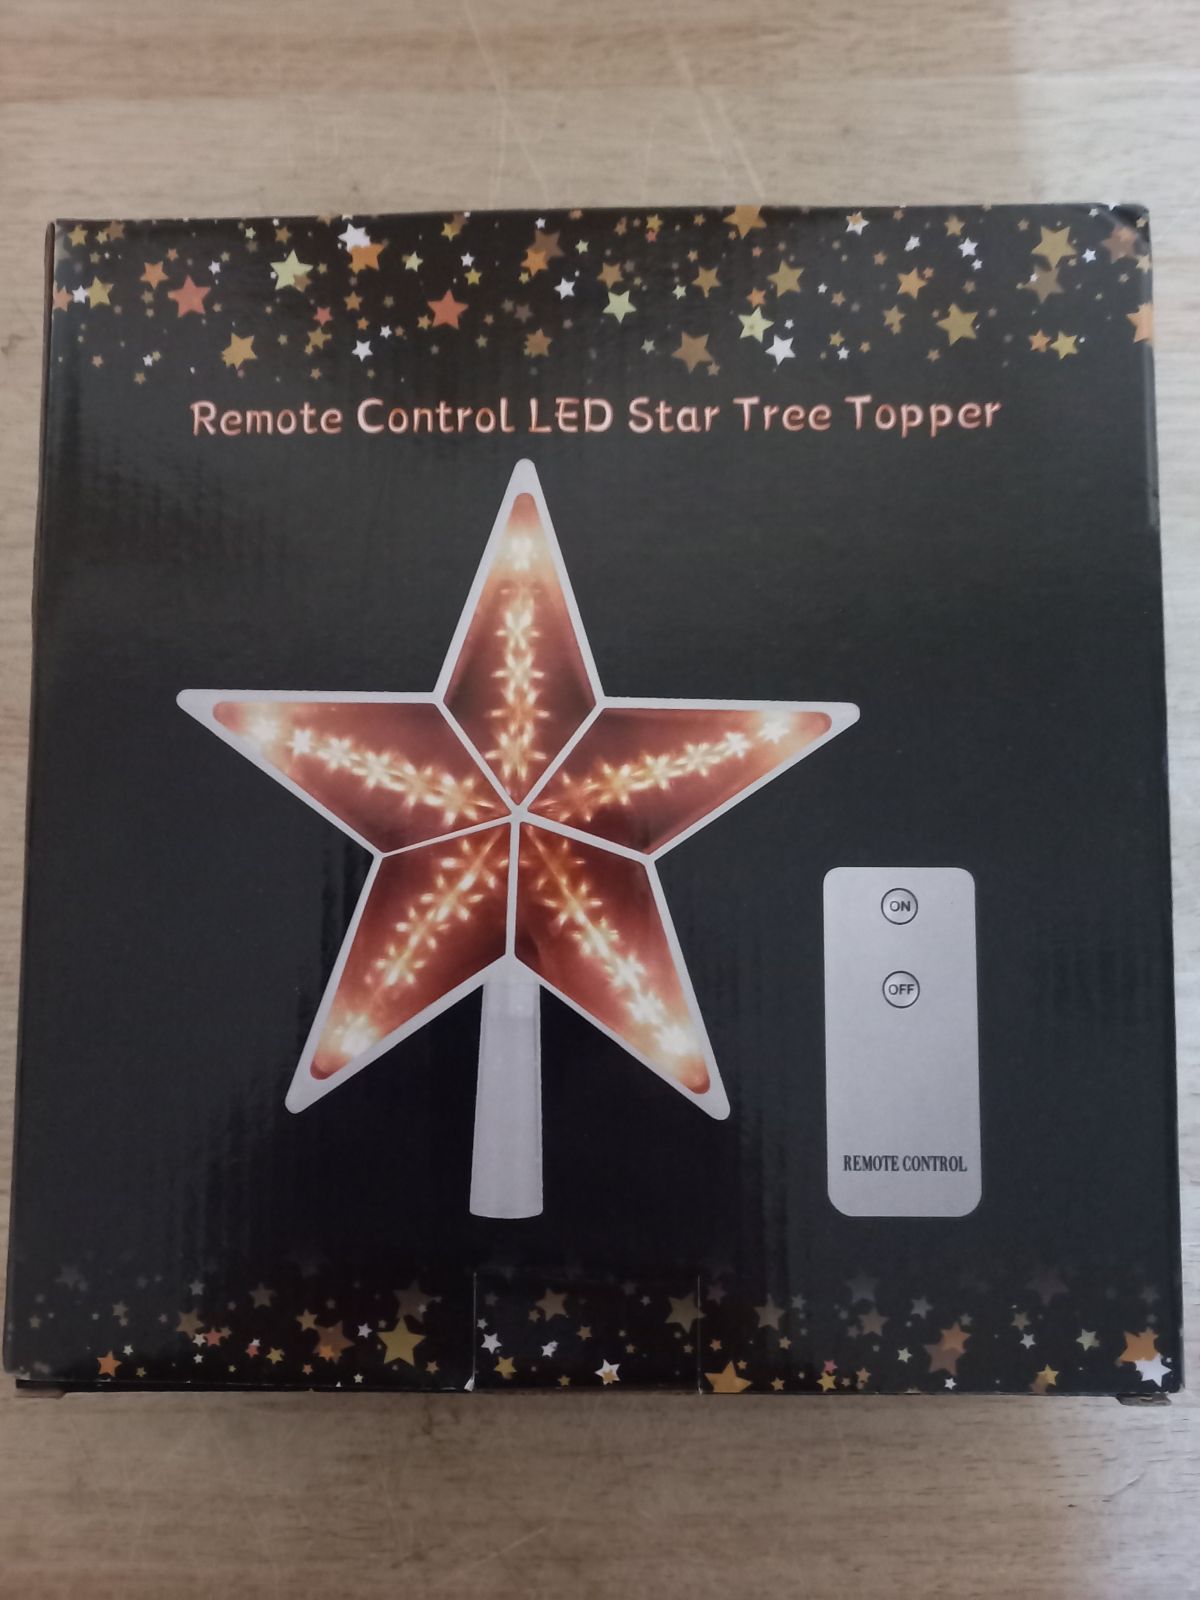 The Christmas LED star tree top